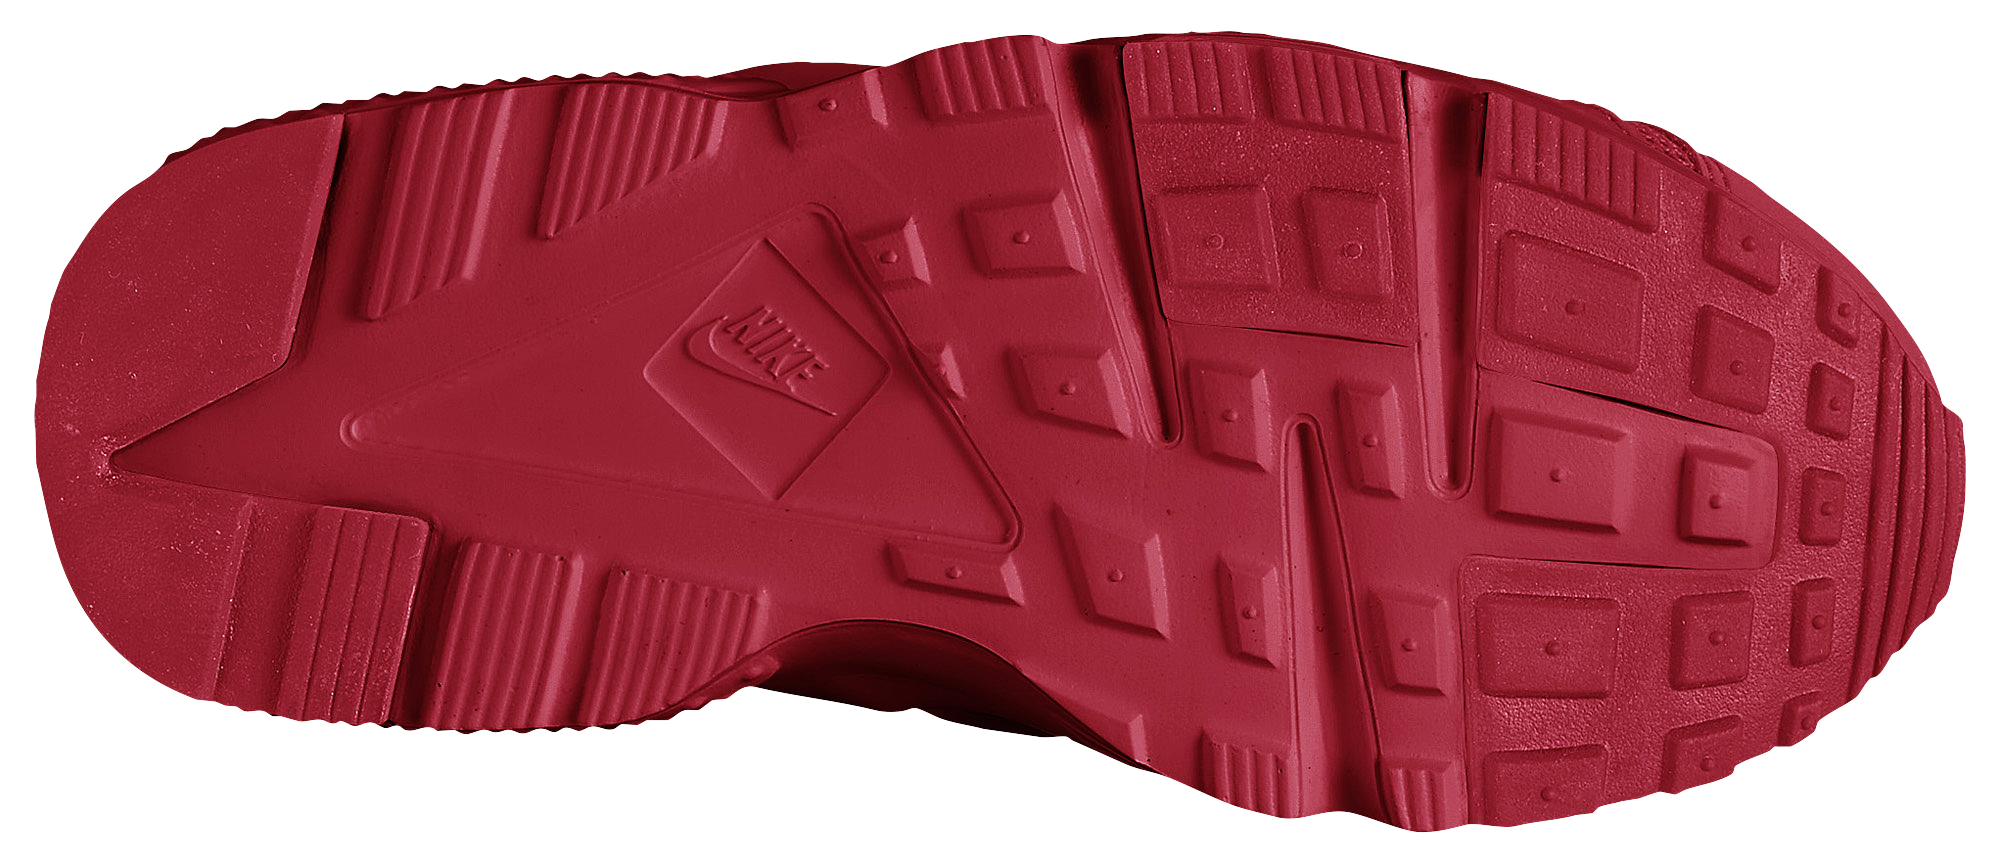 Kids' Nike Huarache | Foot Locker